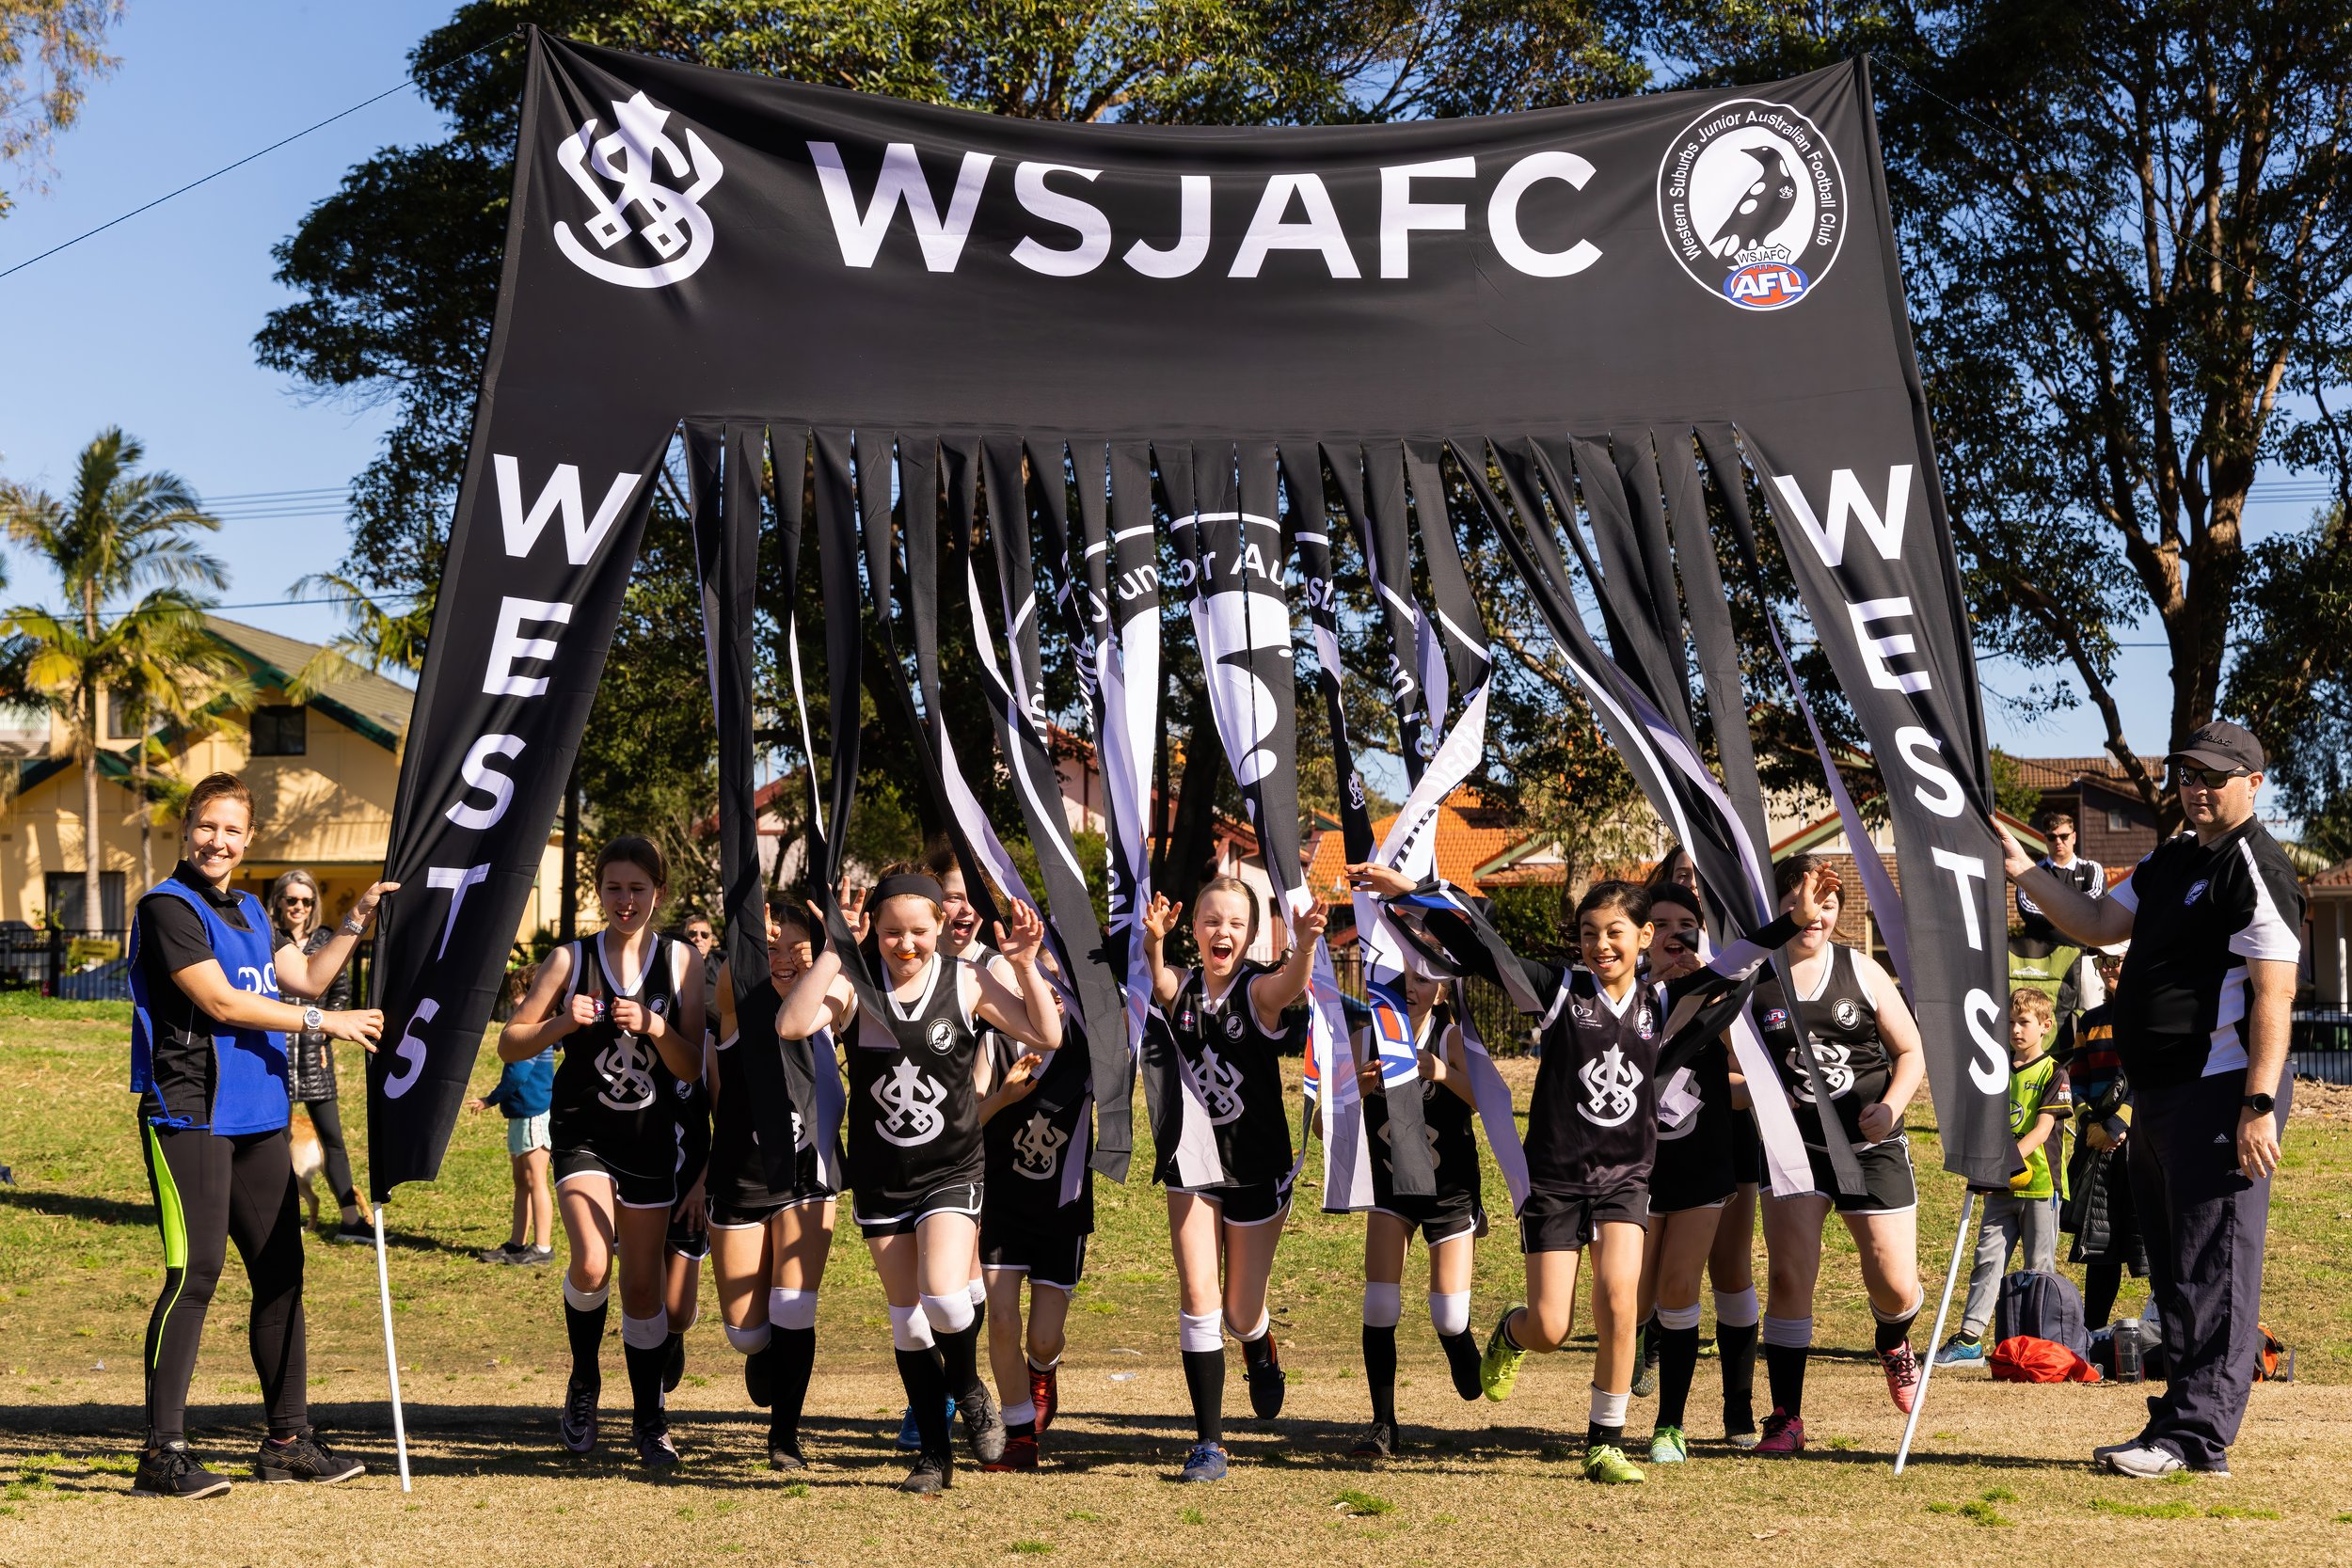 WSJAFC-banner-girls-team-arriving-field.jpg